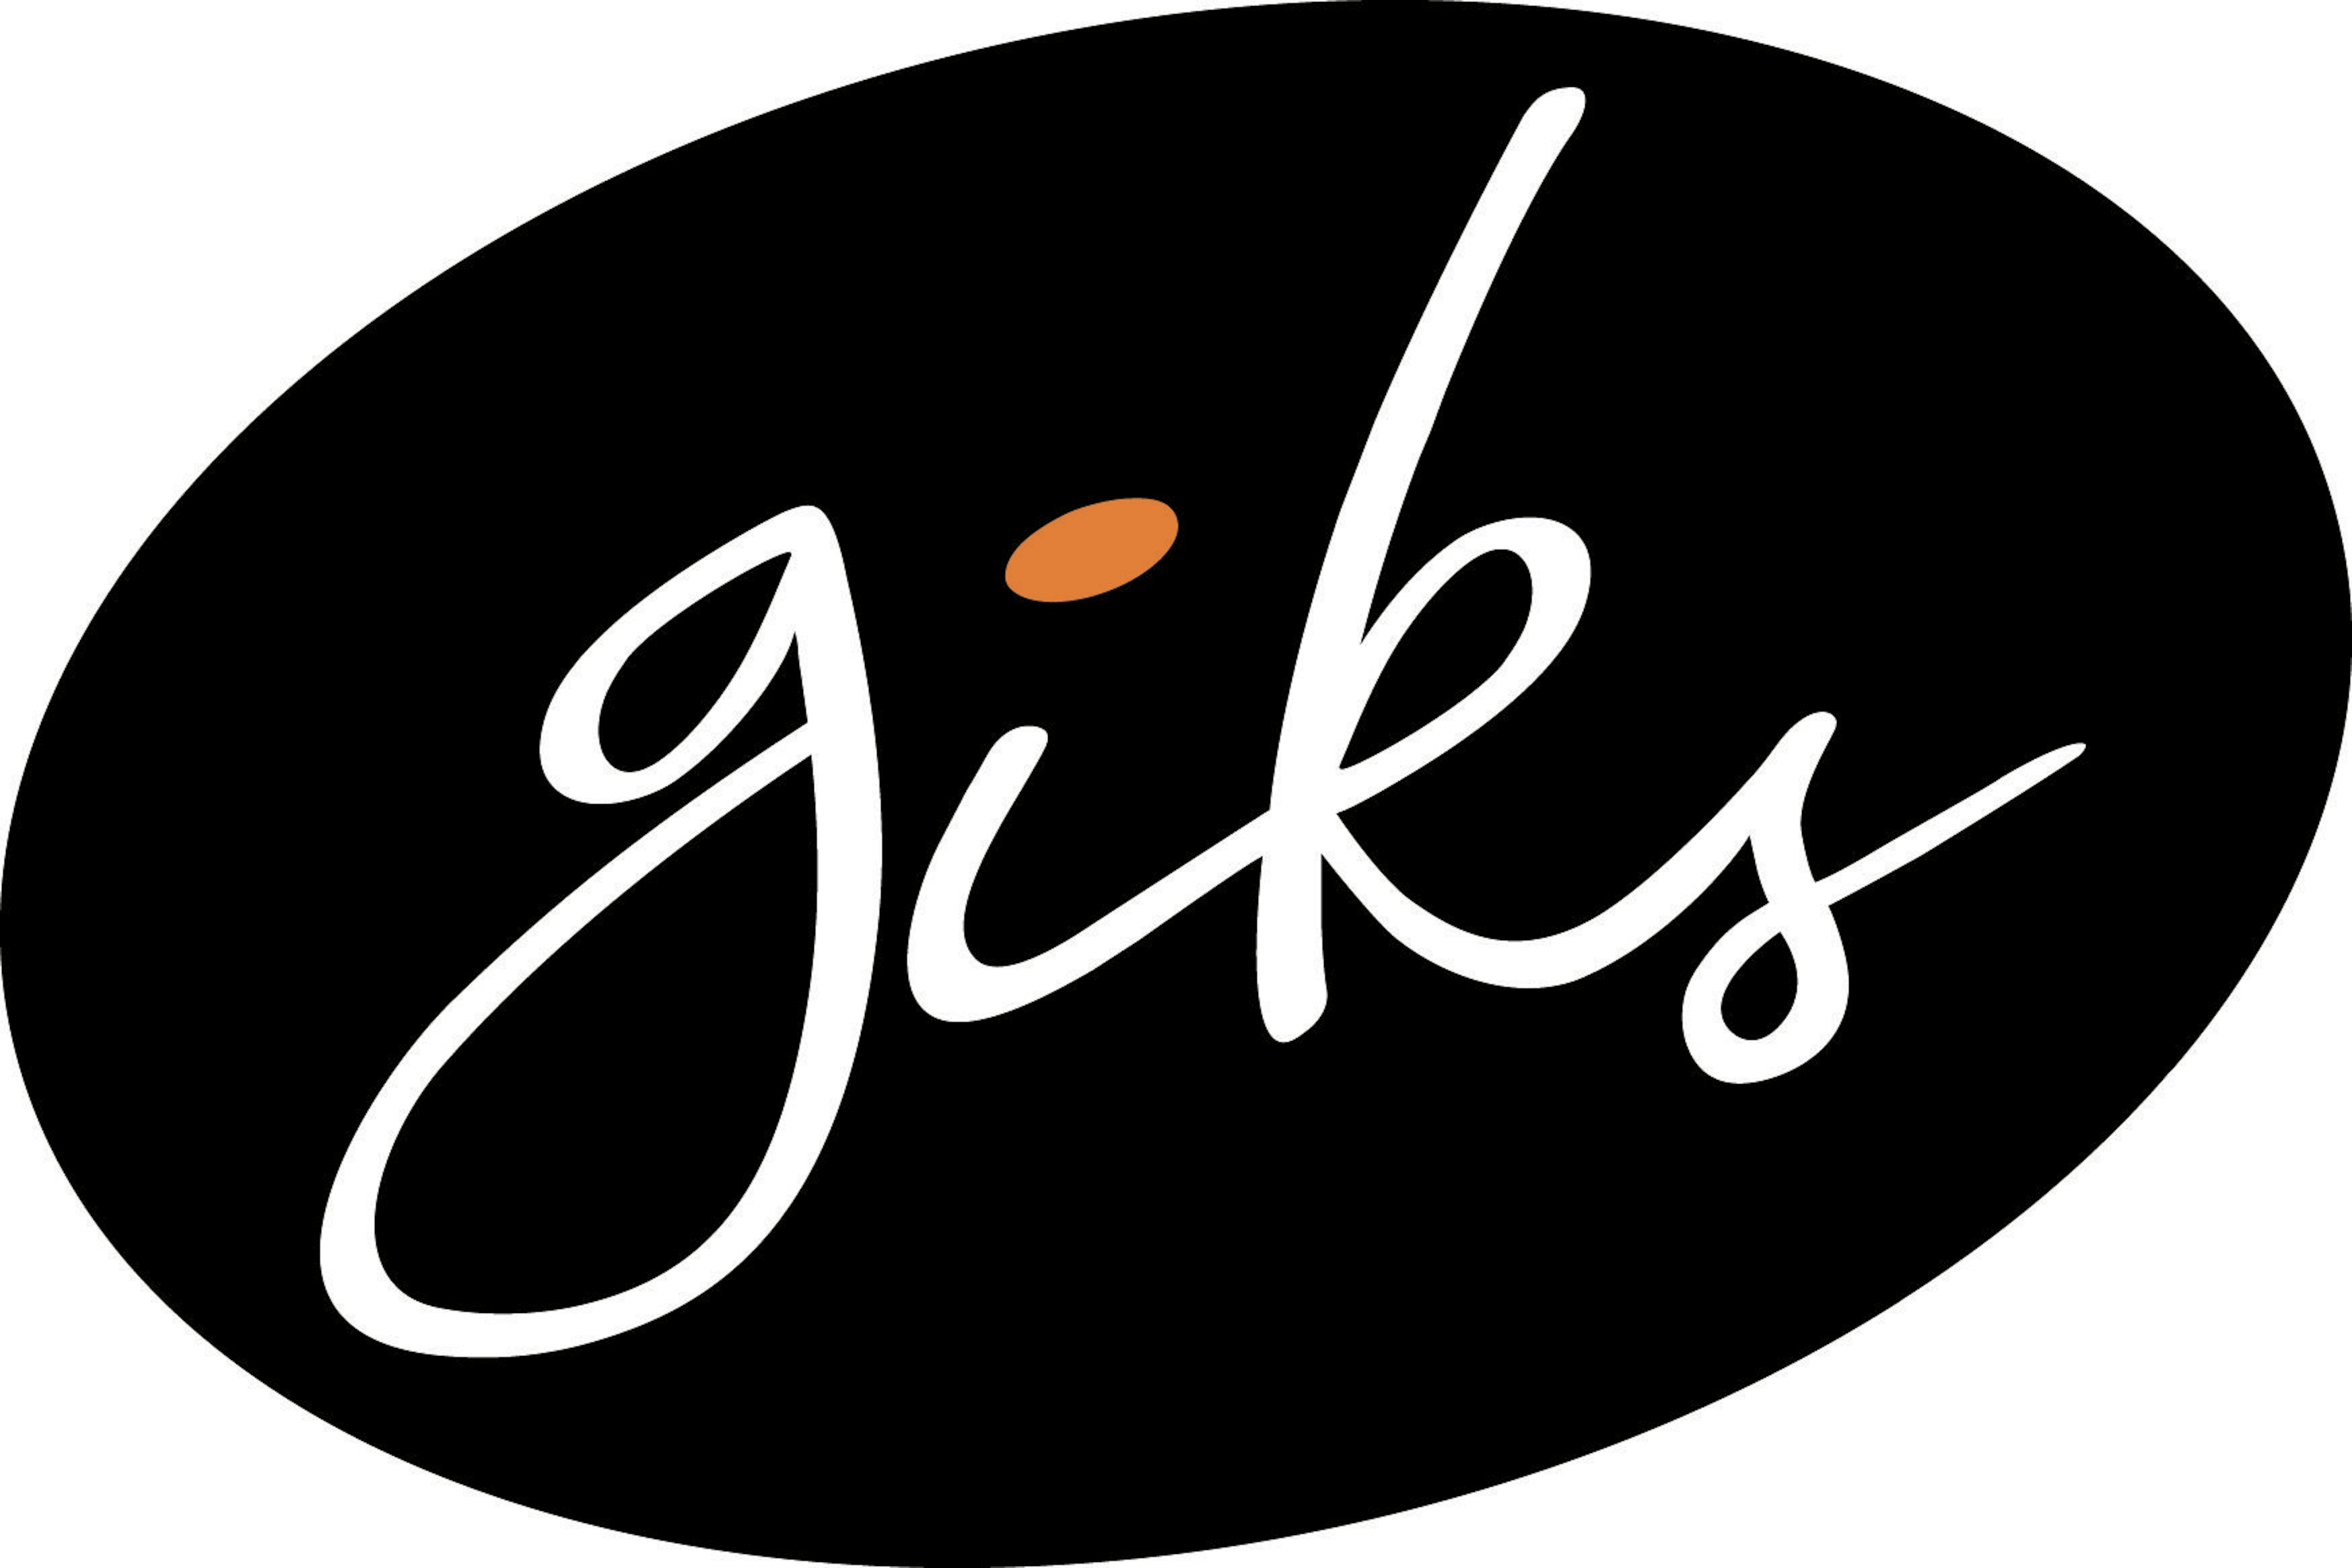 GIKS logo